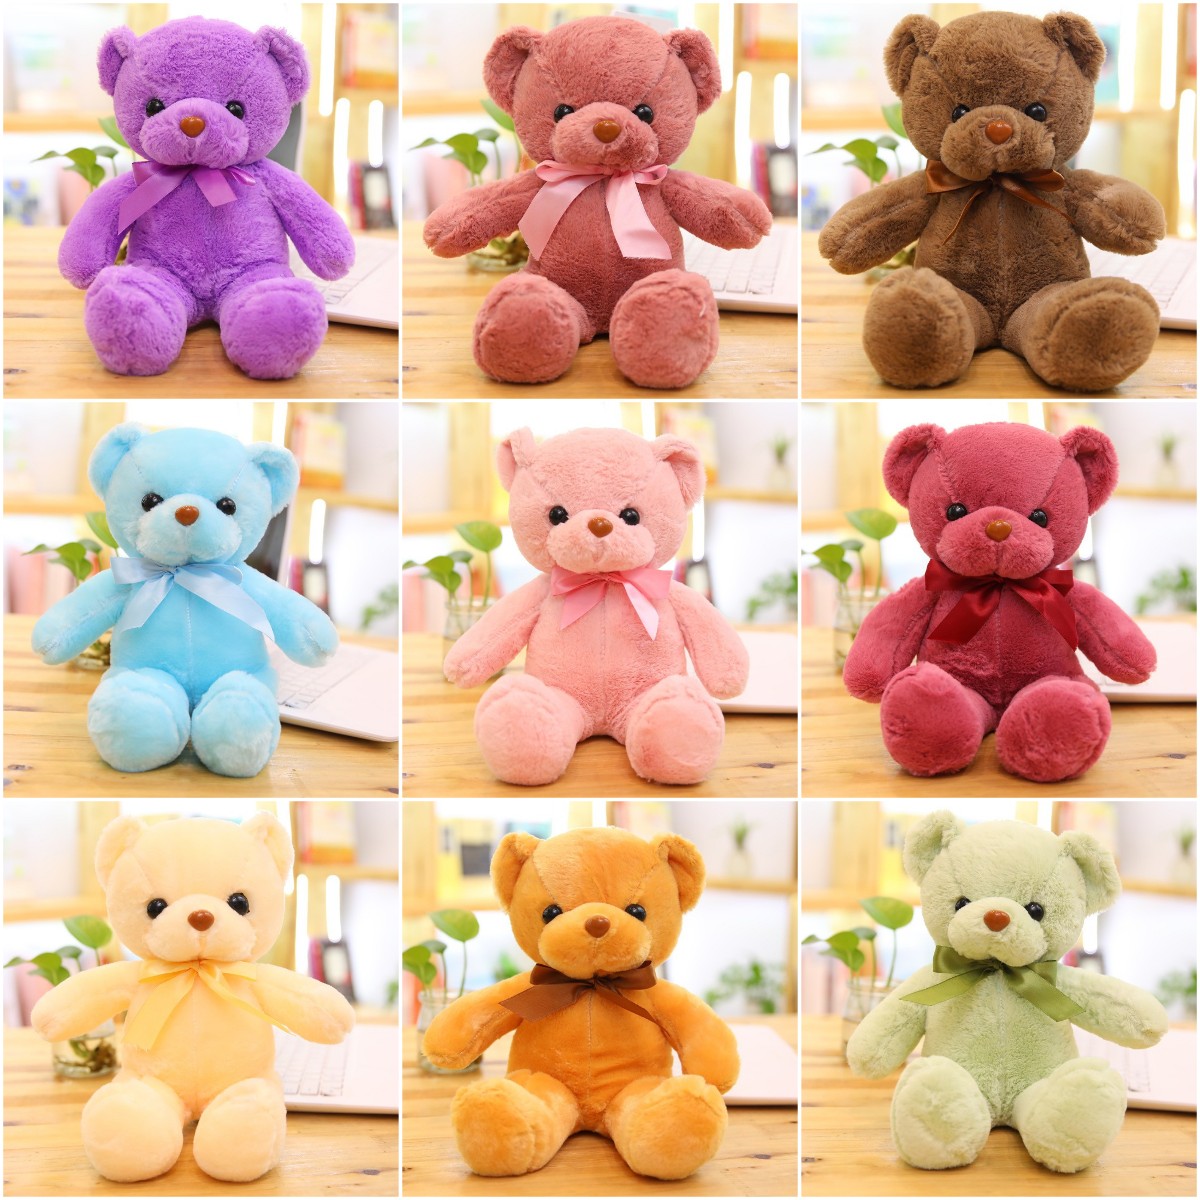 118216 Colored In Cute Teddy Bear Plush Toy Soft Stuffed Hug Little Gift